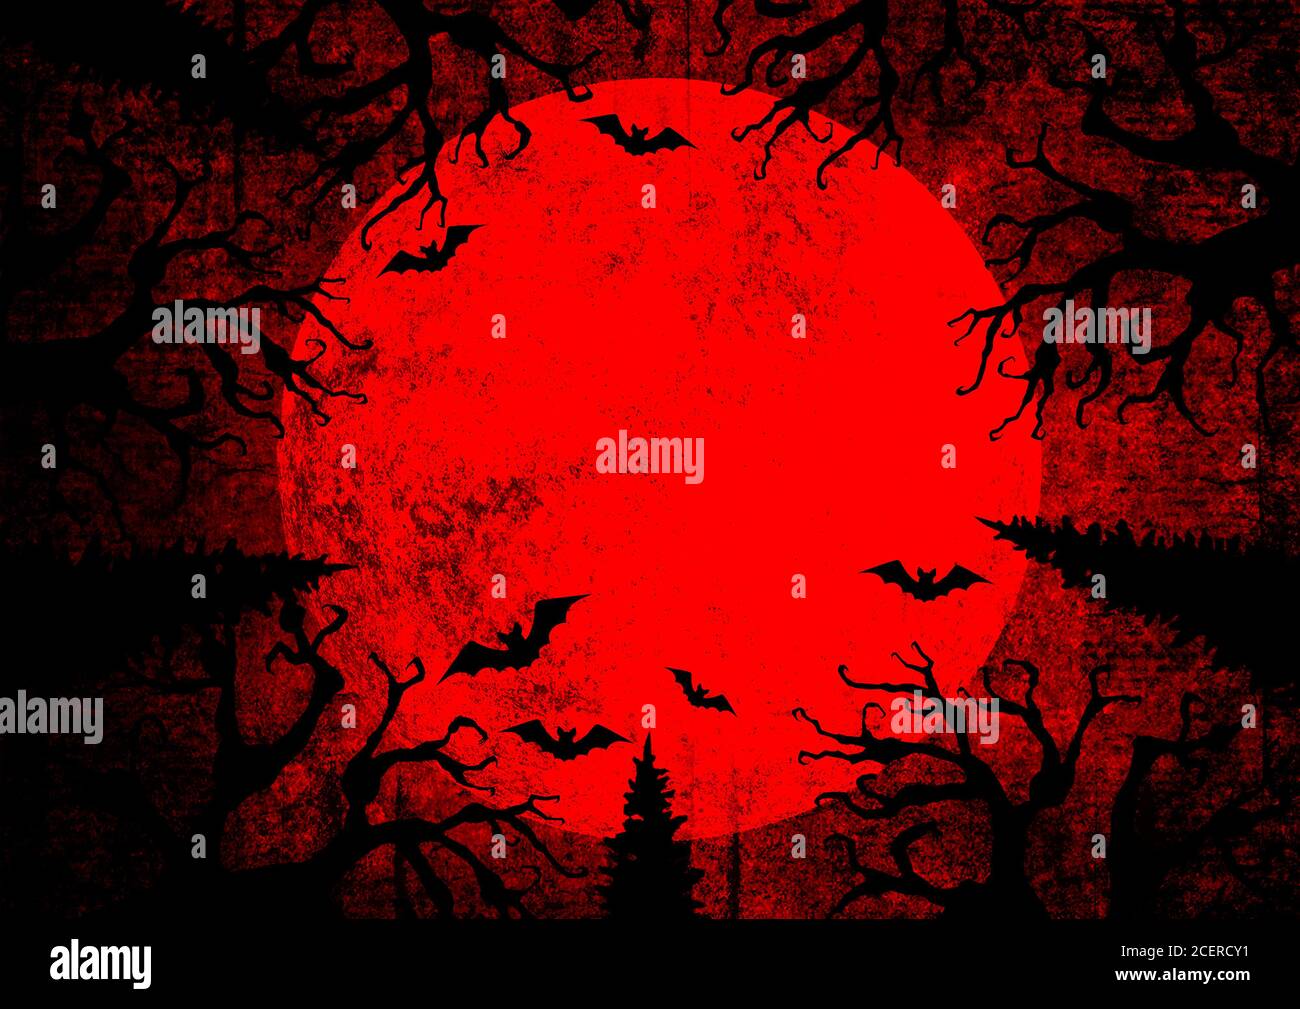 Maldito halloween fotografías e imágenes de alta resolución - Alamy